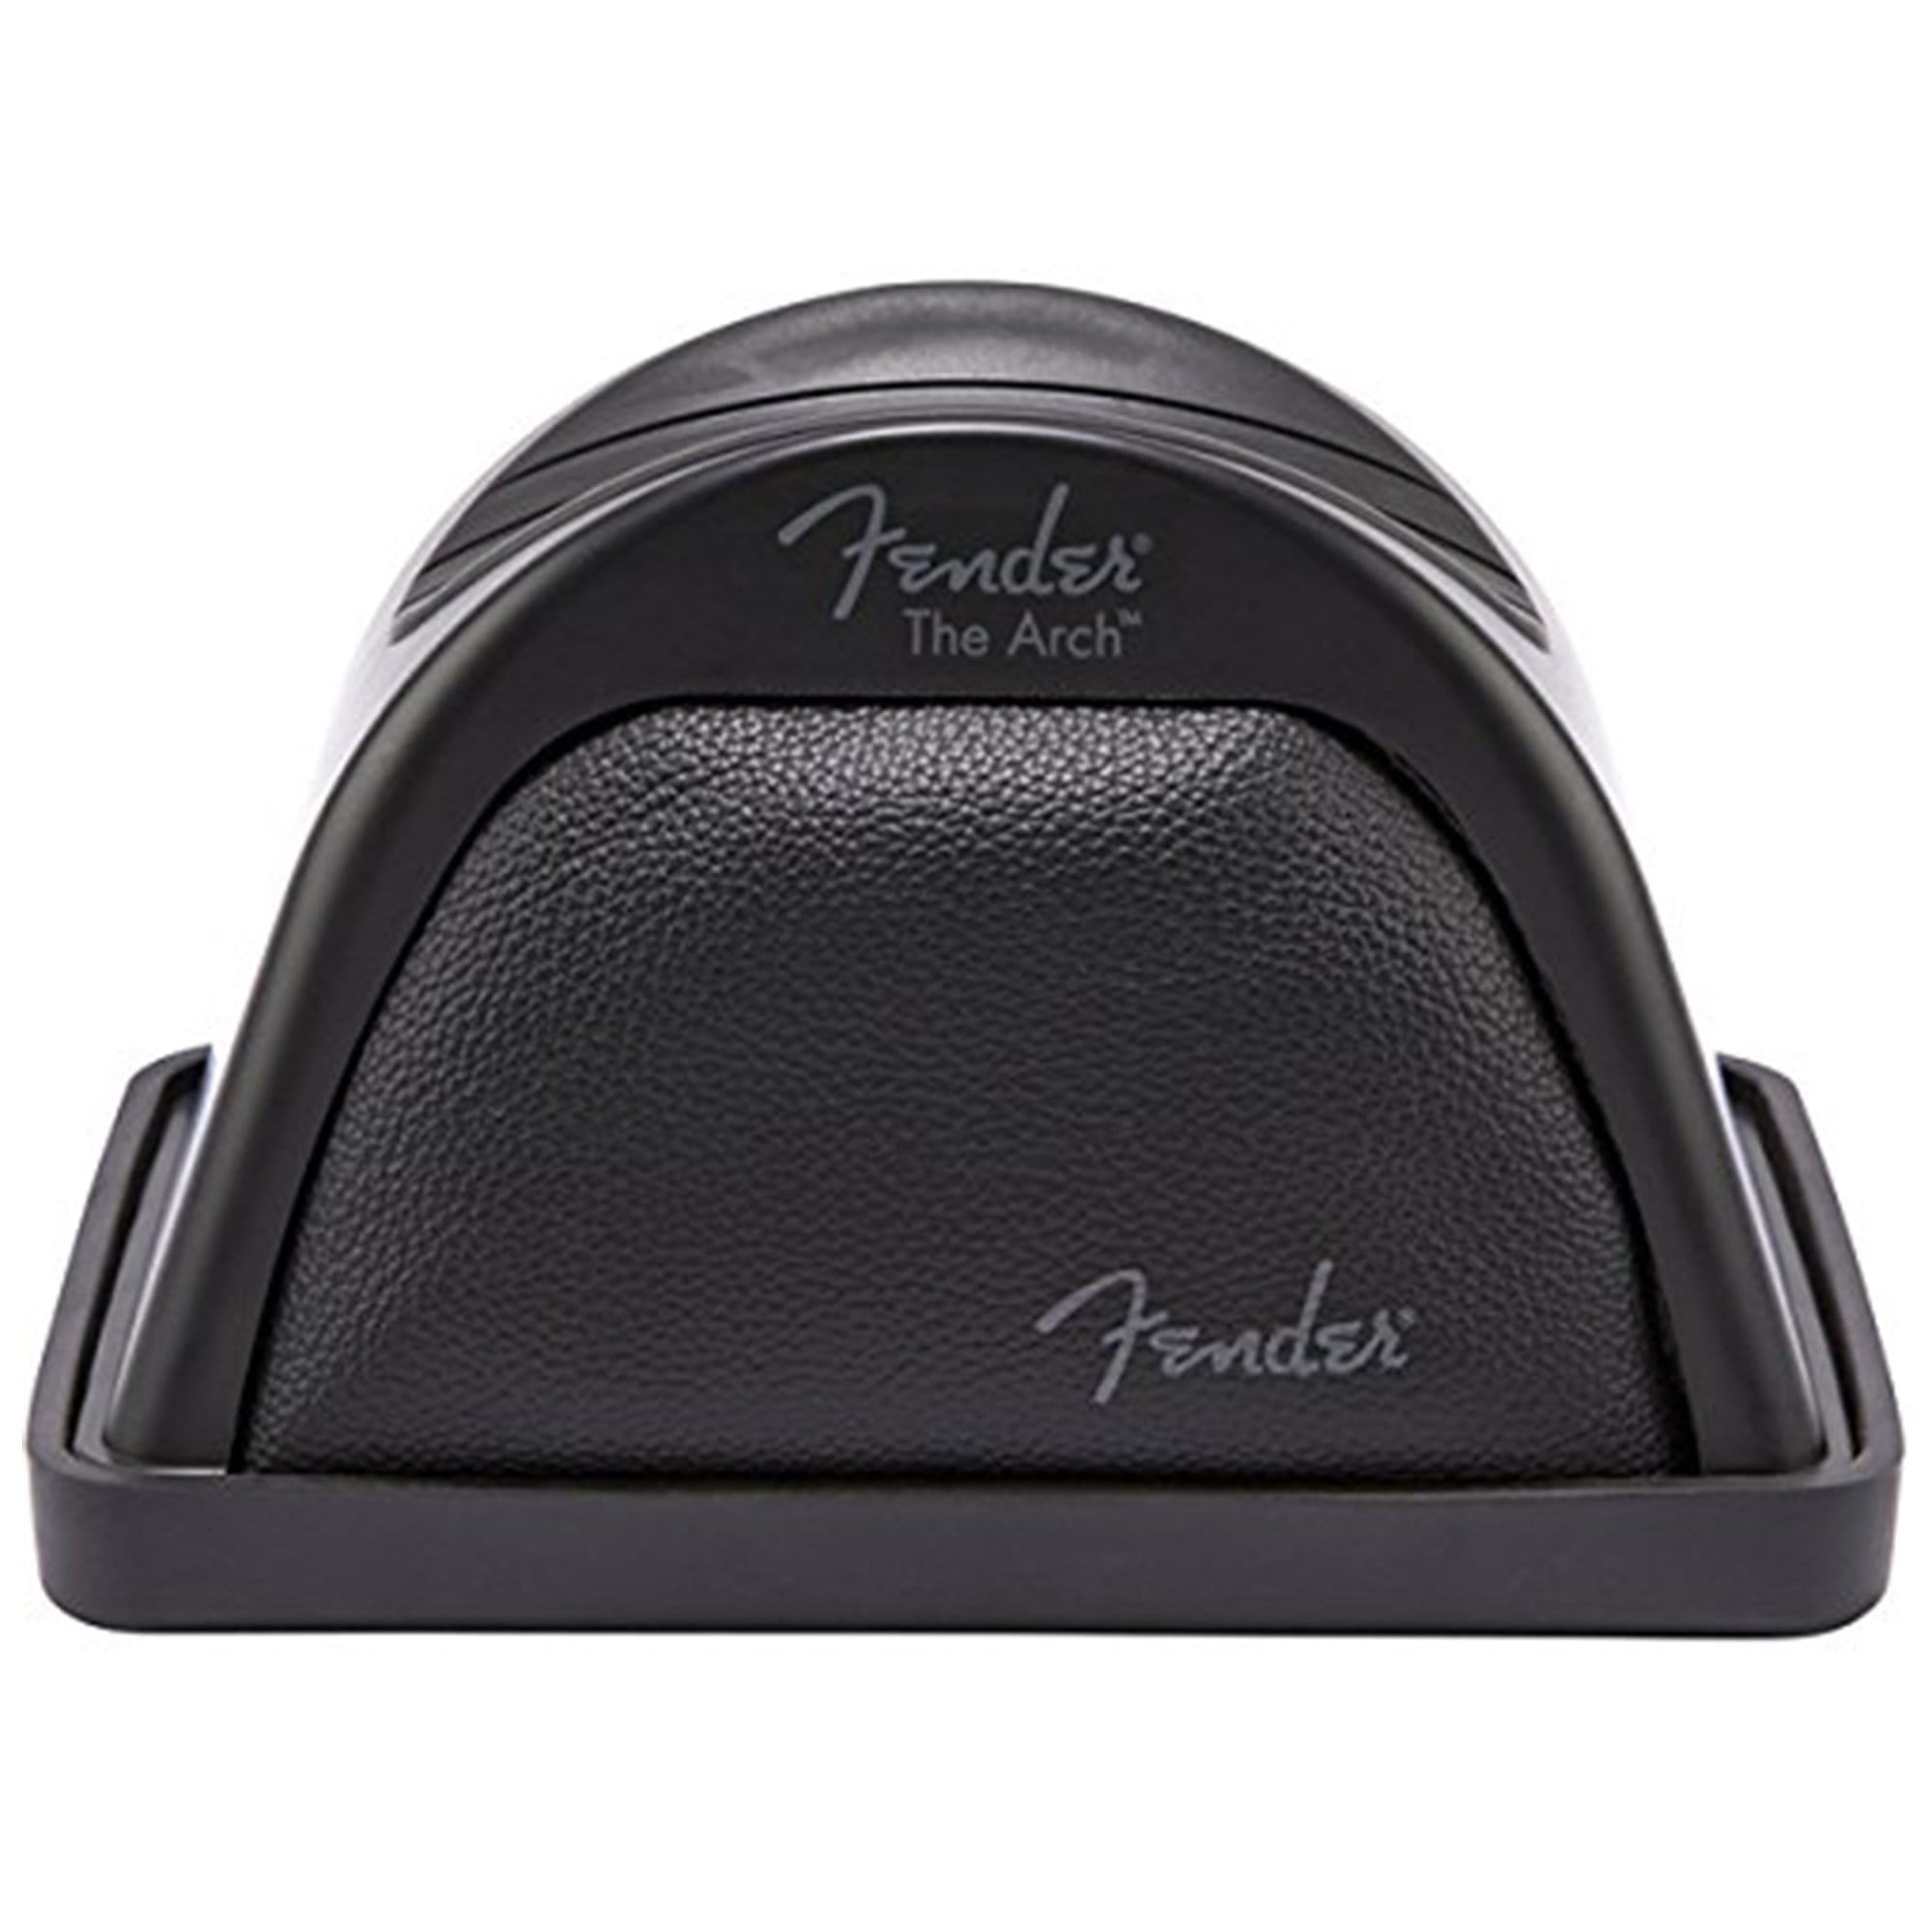 Fender The Arch Guitar Workstation & Neck Rest Accessories / Stands